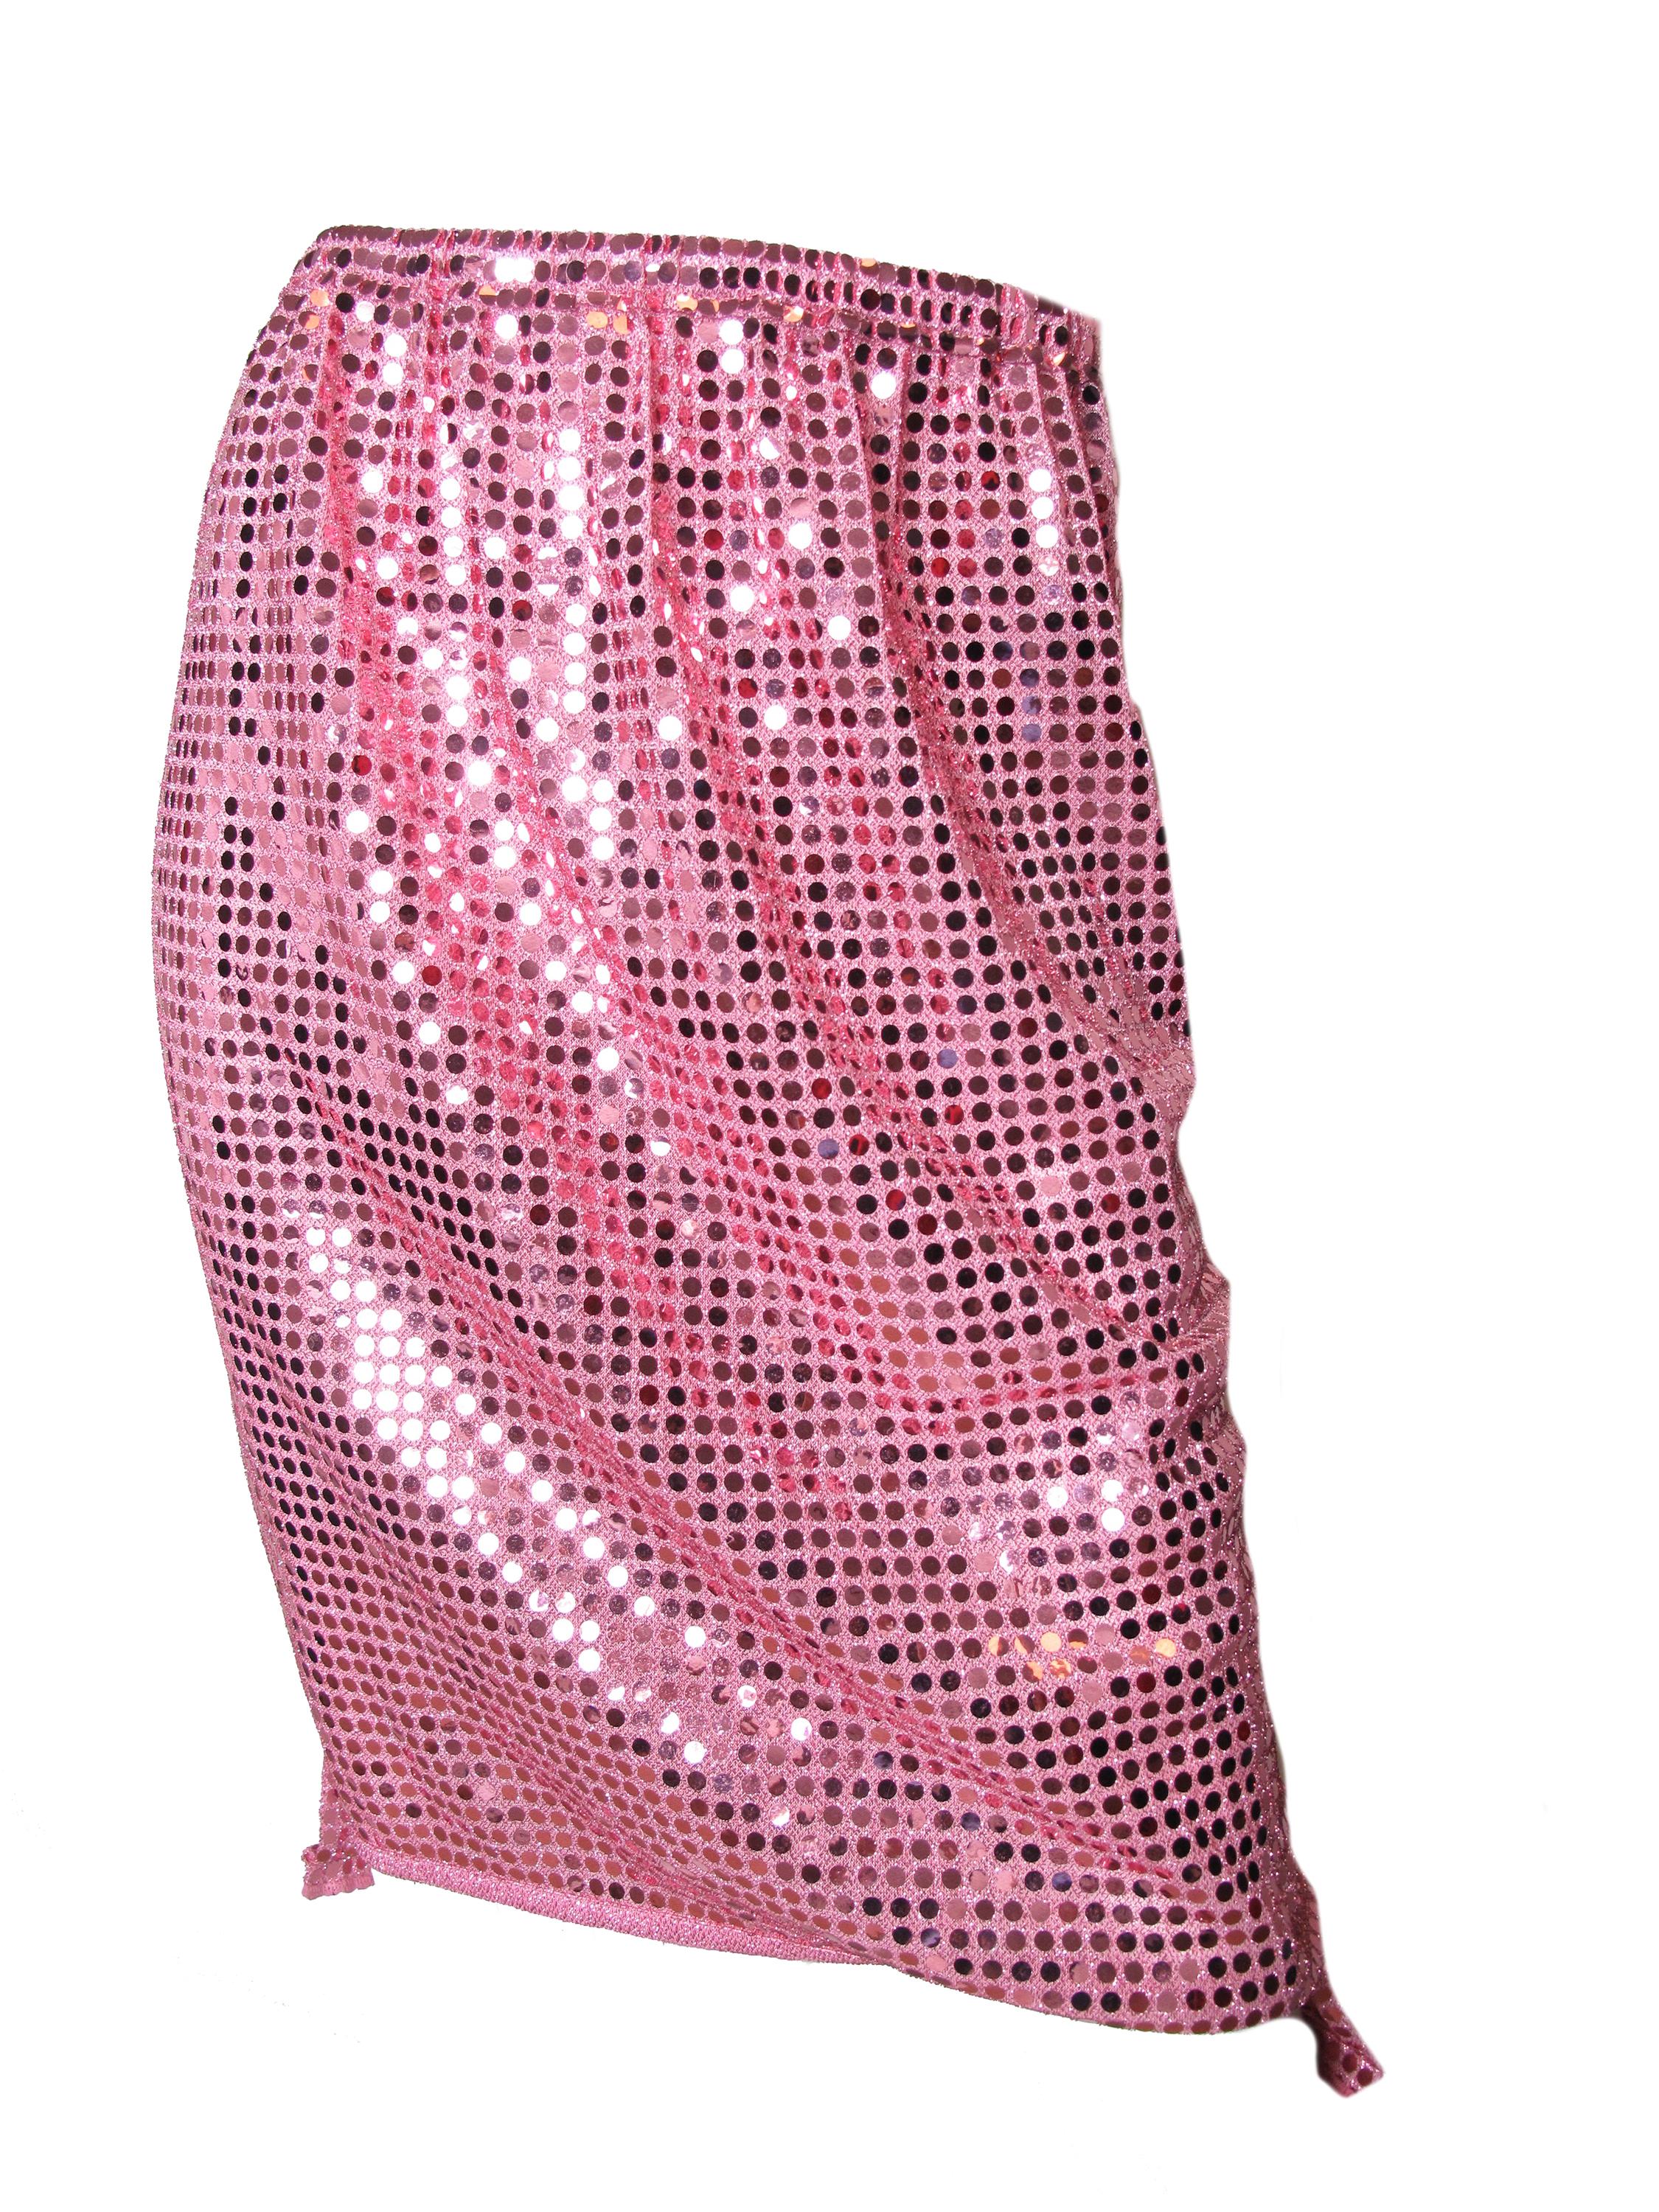 Pink 2007 Comme des Garcons pink sequin skirt elastic waist